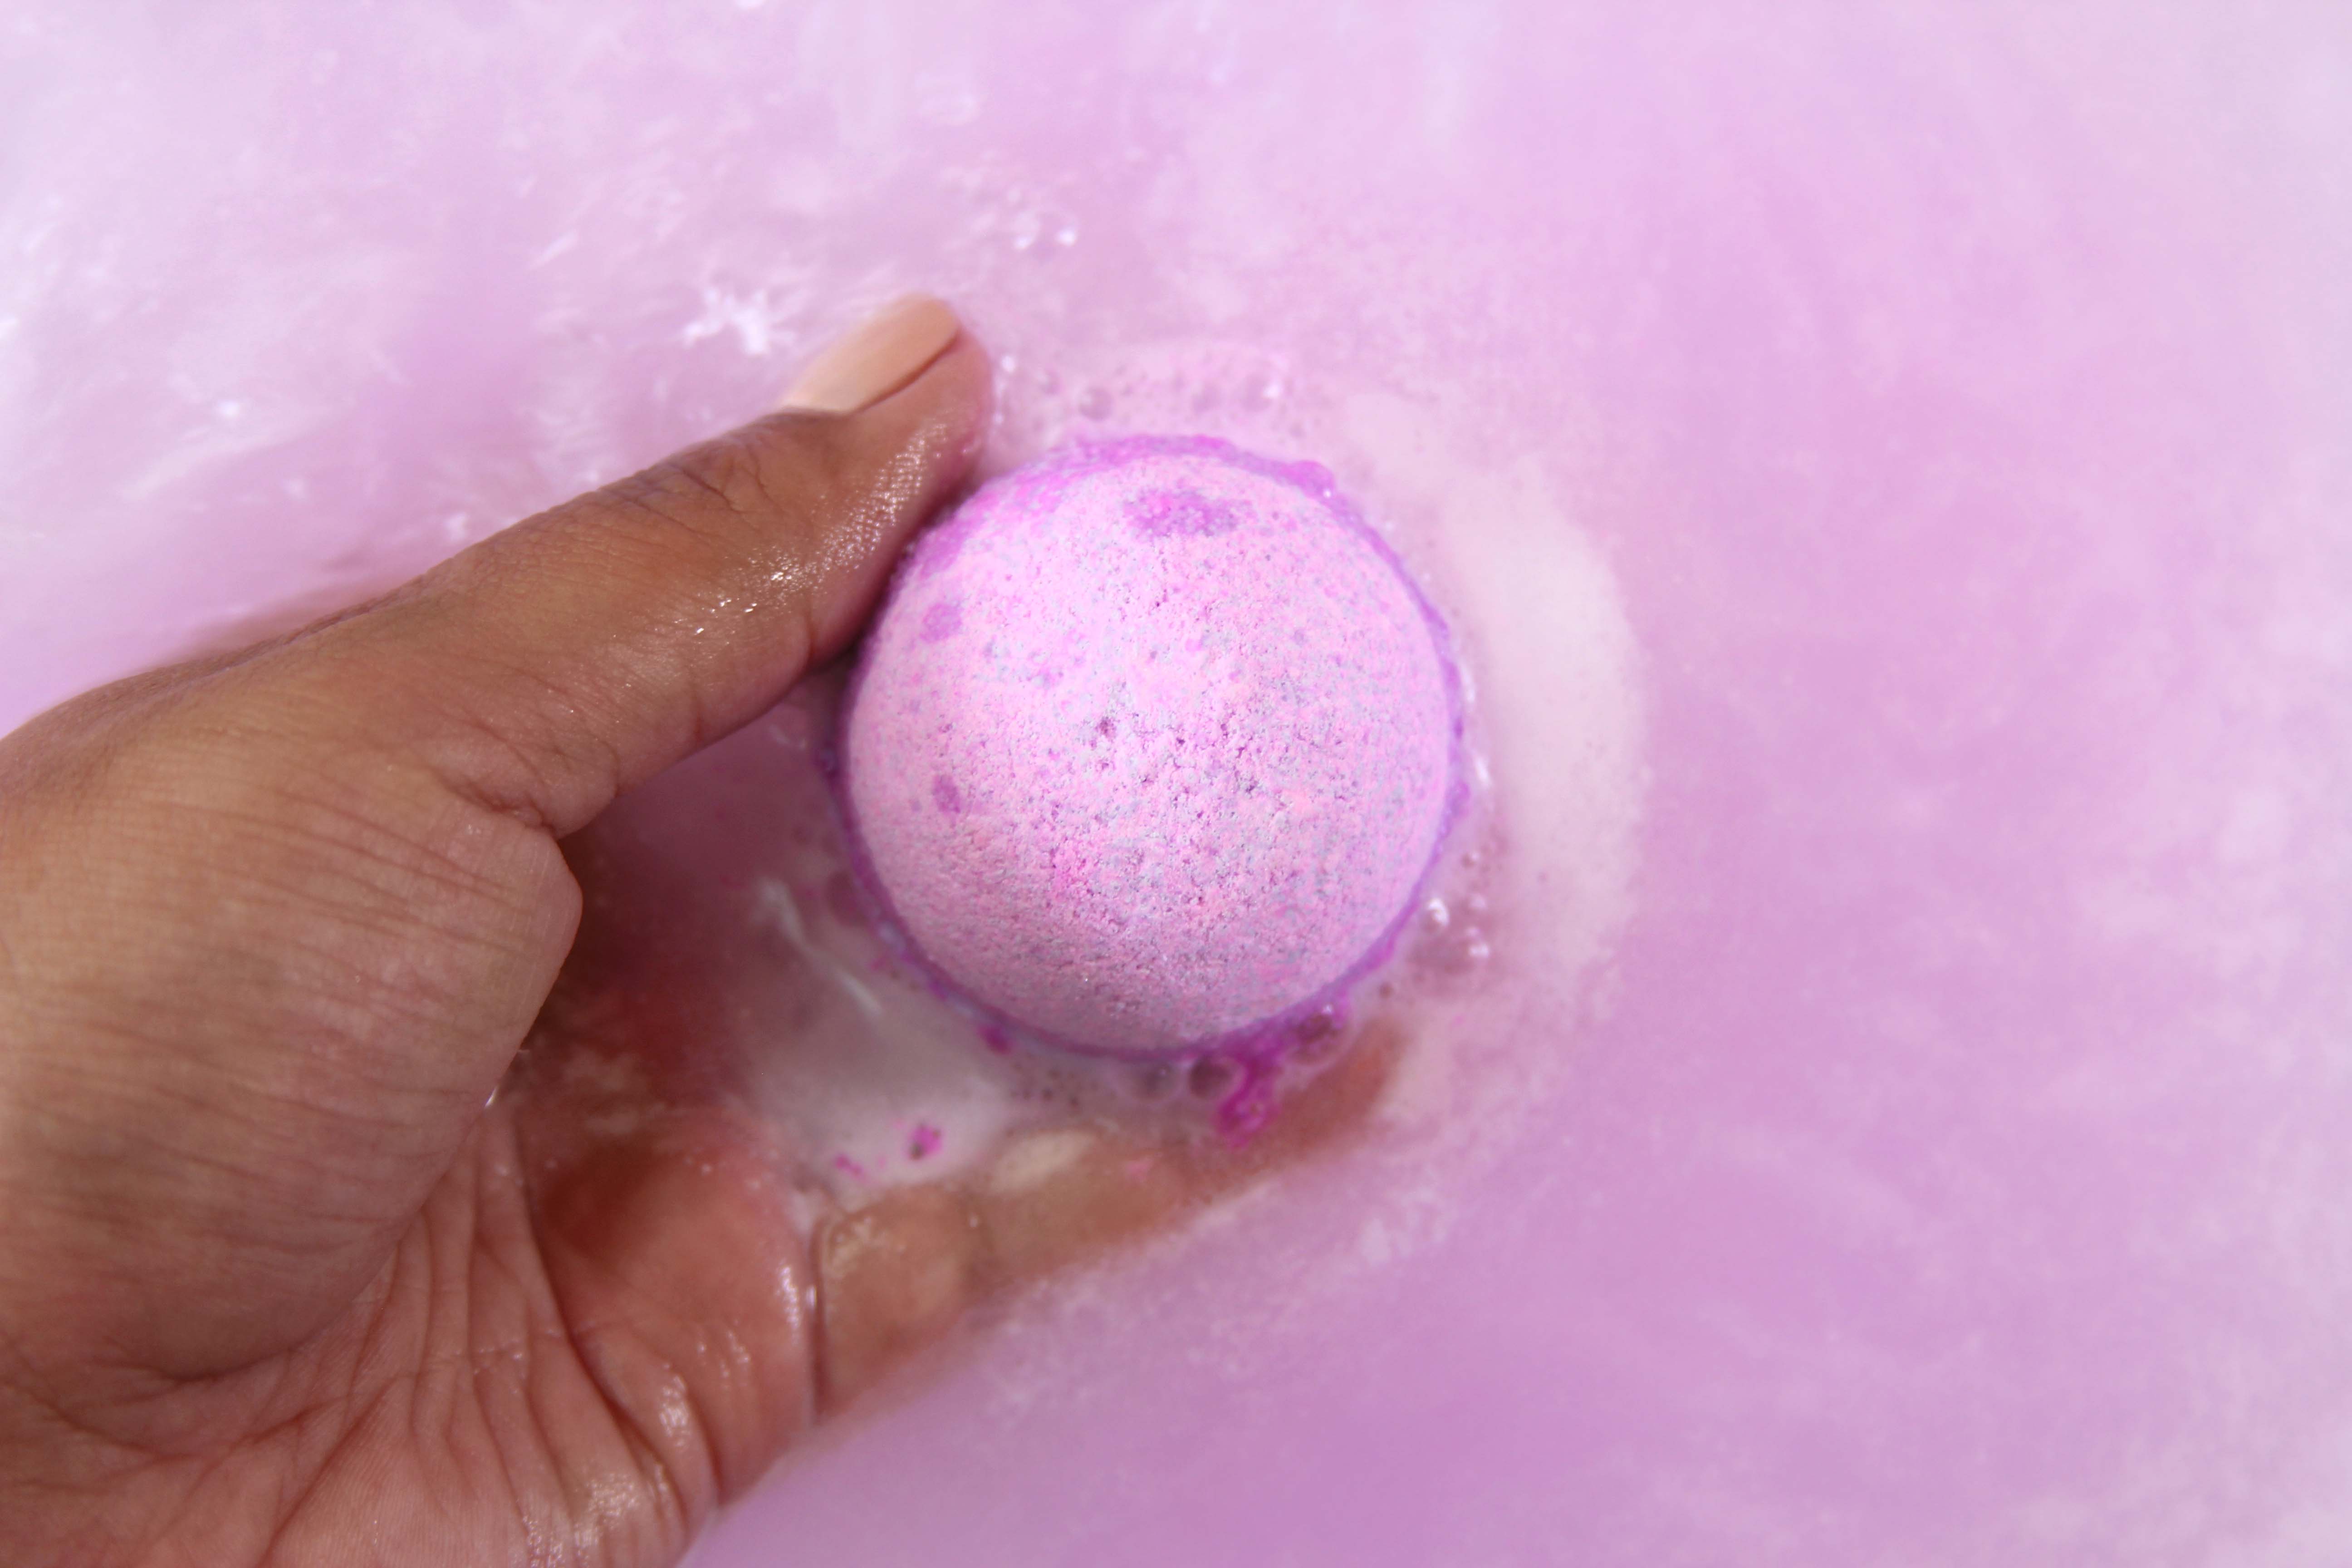 Lavender Chamomile Sleep Bath Bomb Gift Set Nature's Beauty Body Care 